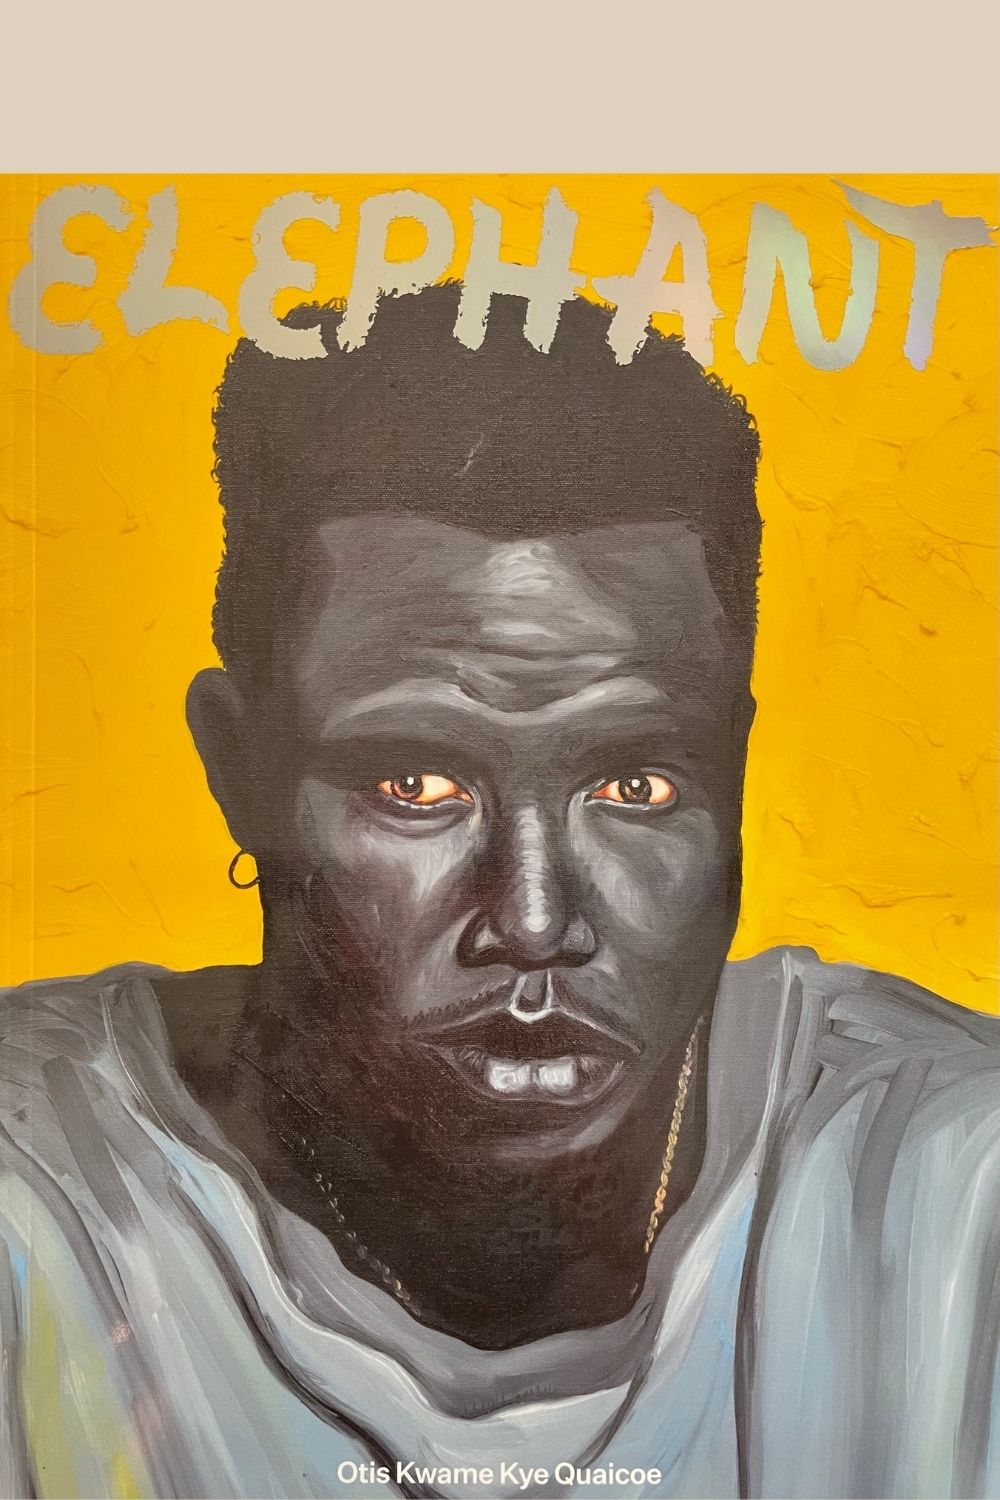 Front cover of Elephant Issue 45 with Otis Kwame Kye Quaicoe